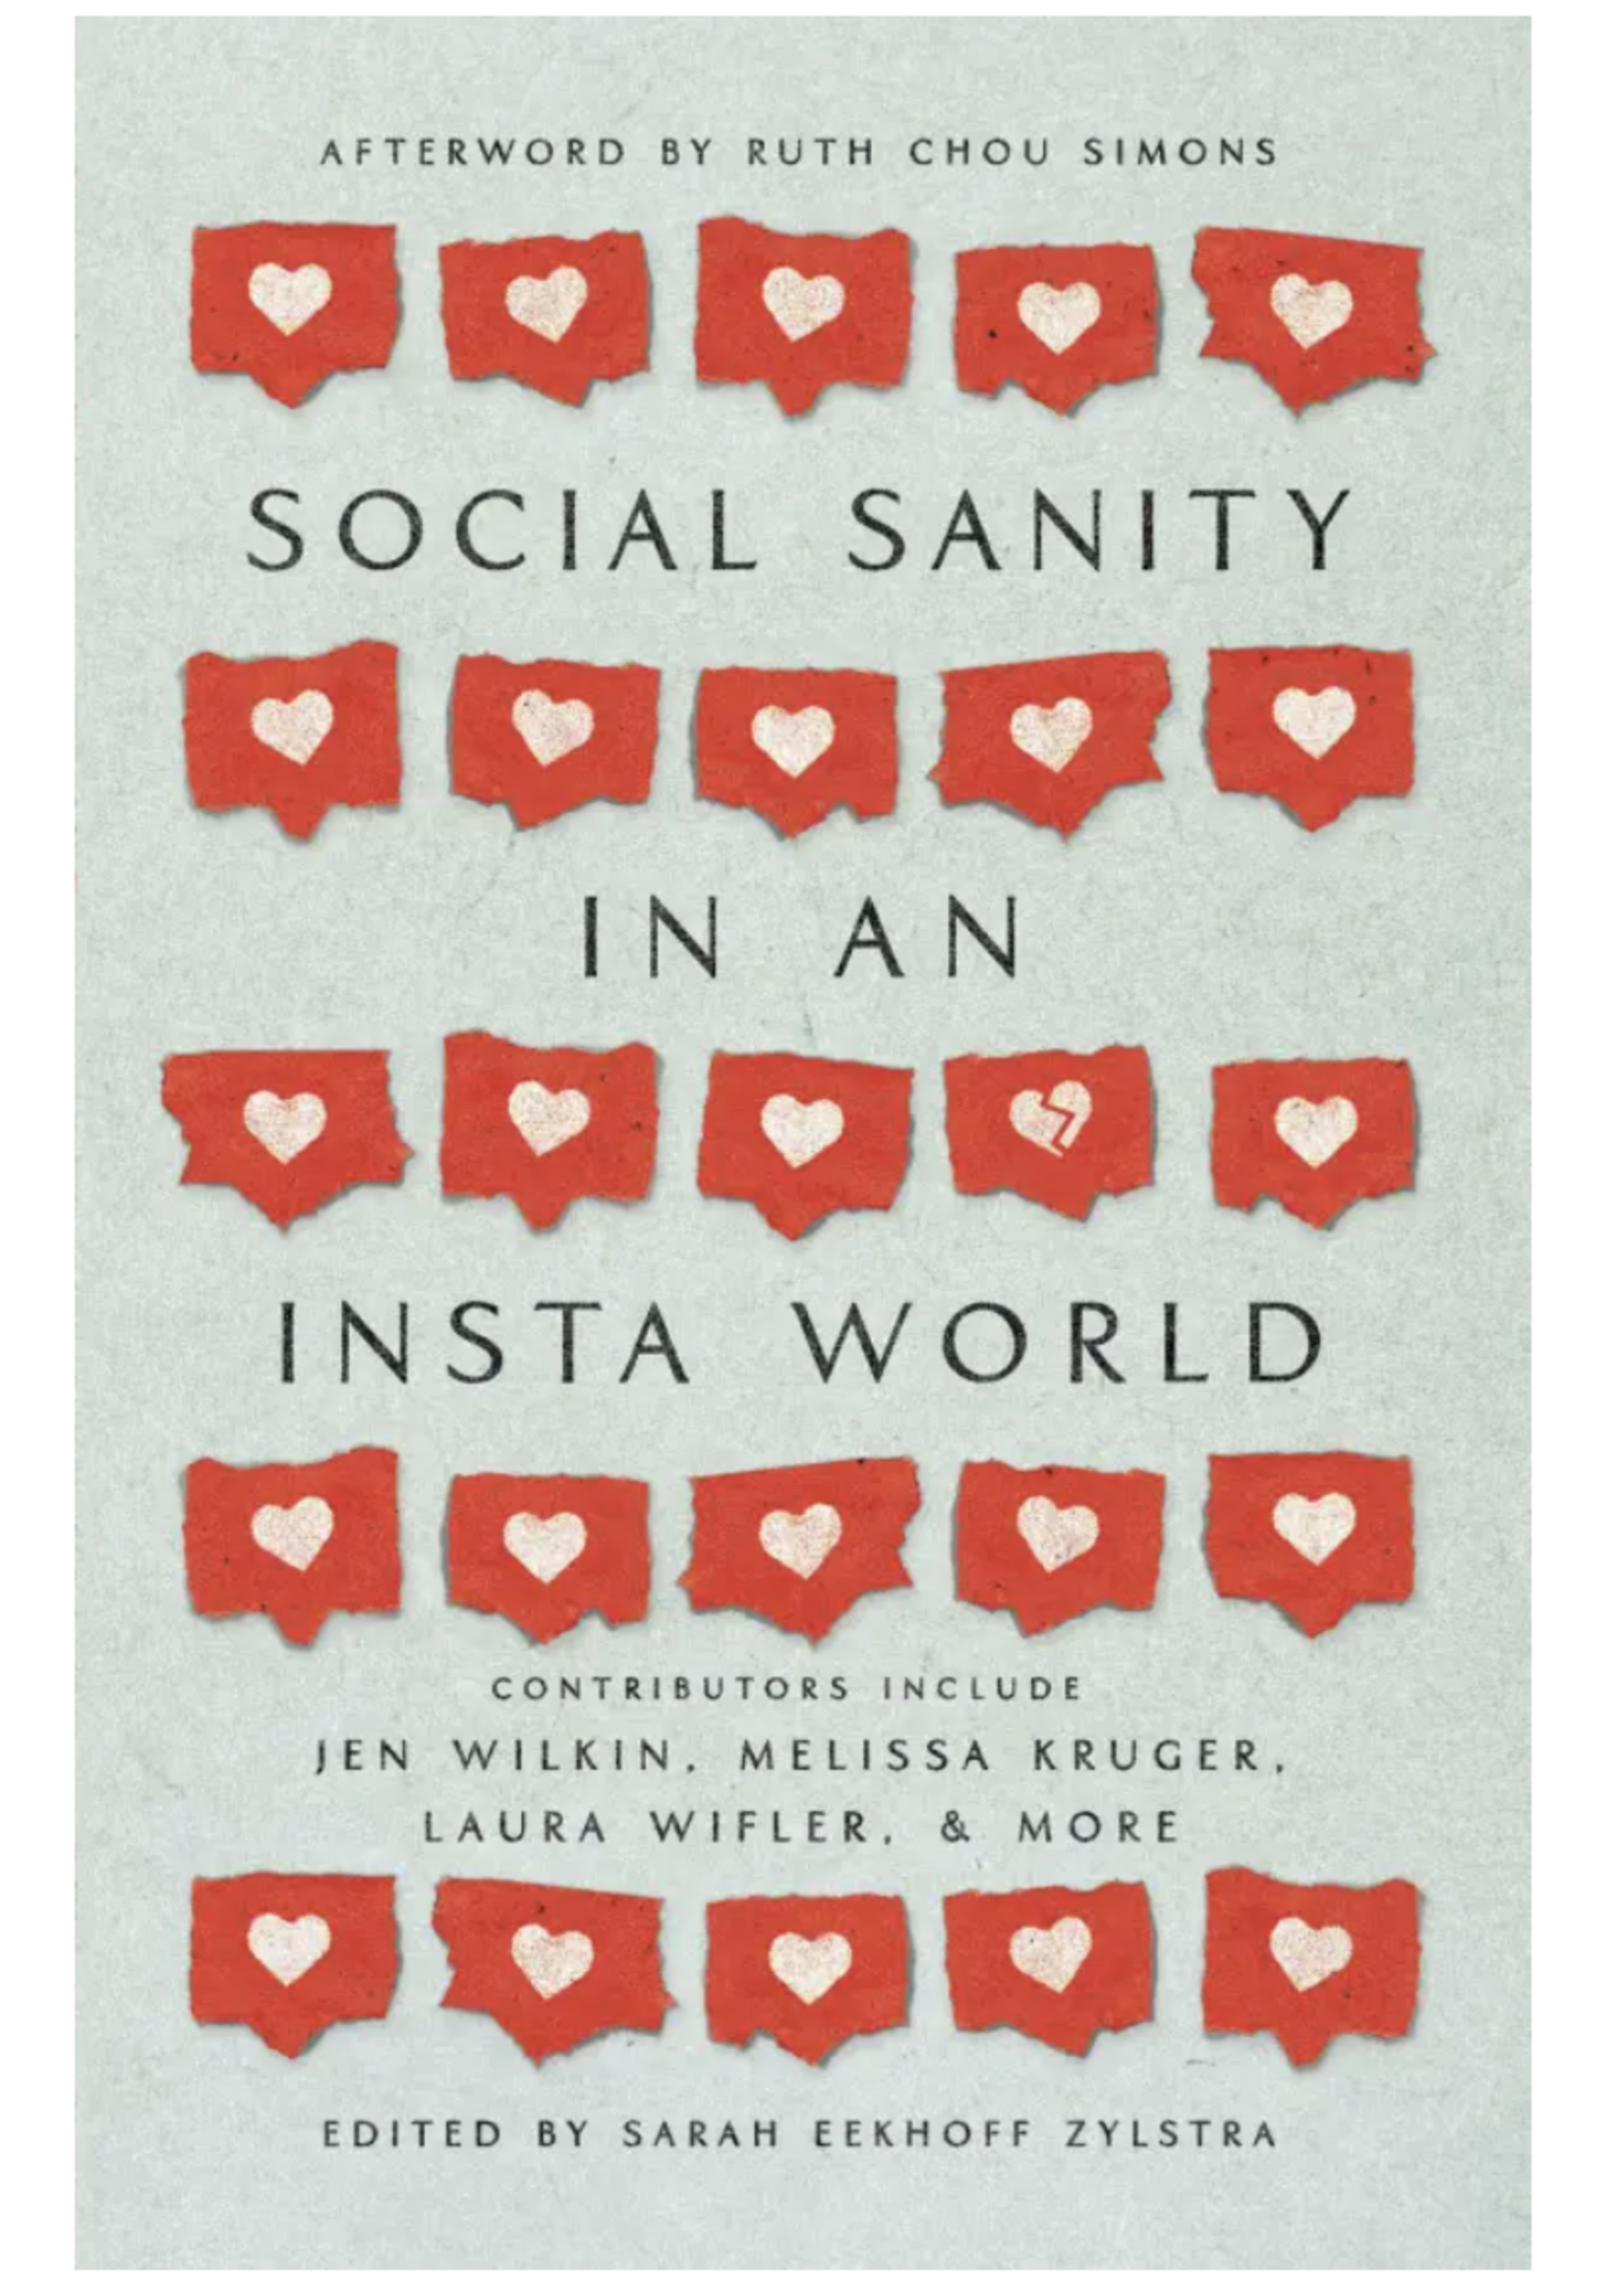 Social Sanity In An Insta World [Sarah Eekhoff Zylstra]